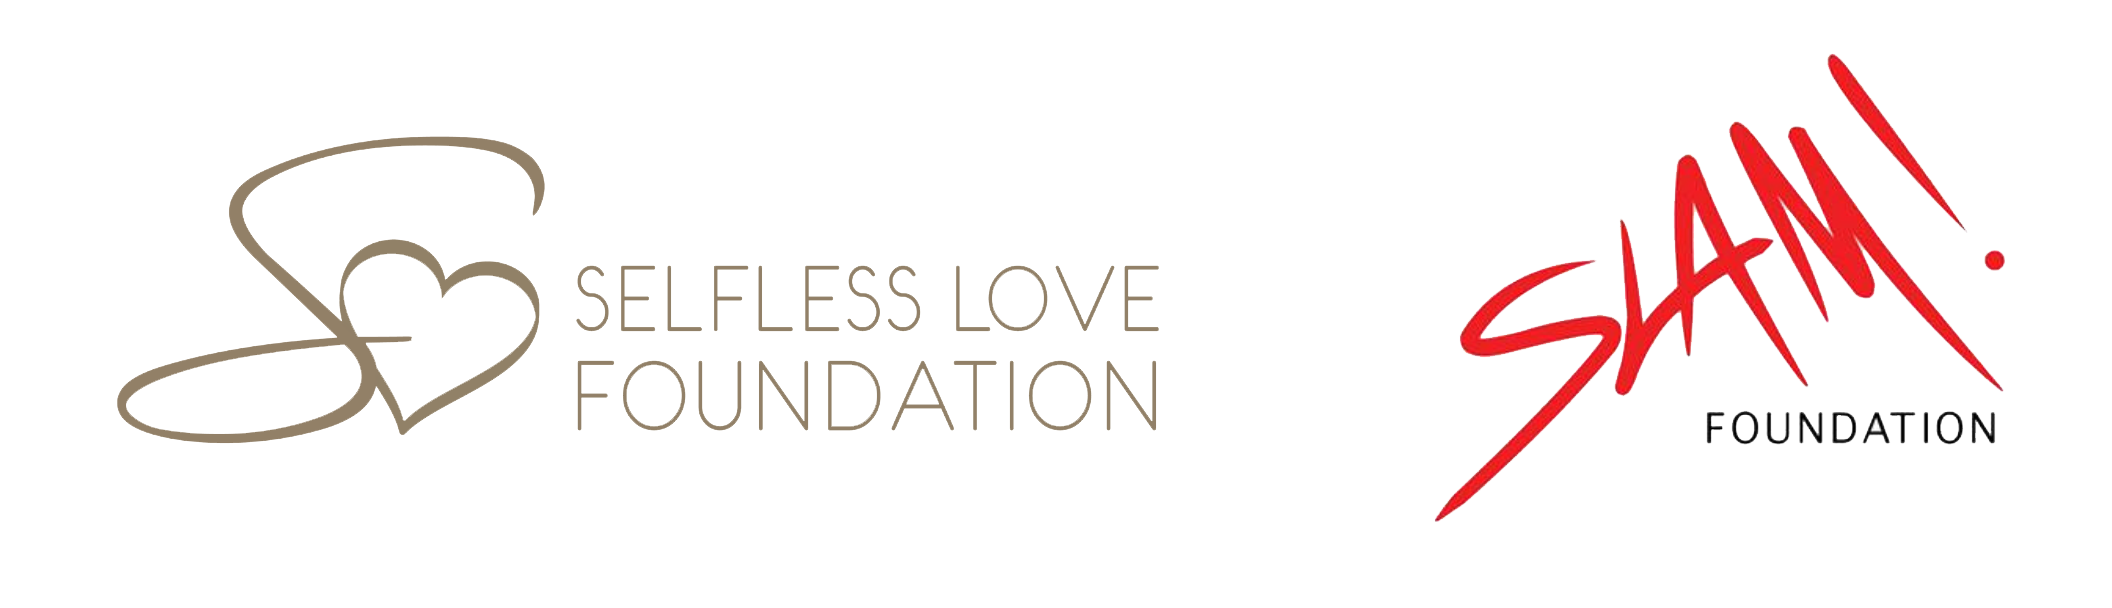 selfless-love-foundation-slam-foundation